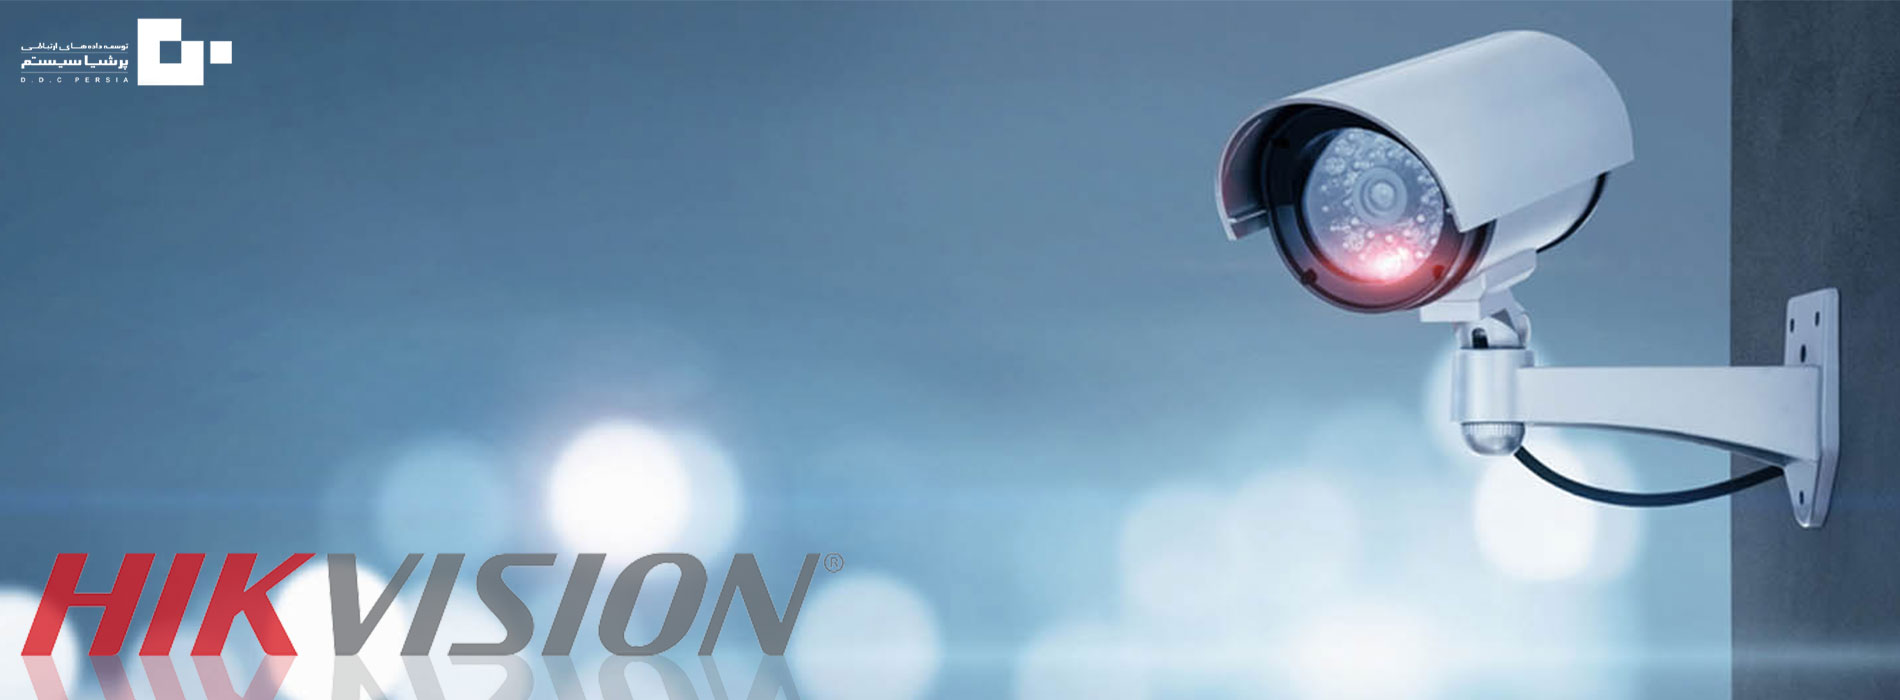 hikvision company 1 - 5 برند دوربین مداربسته مطرح در جهان